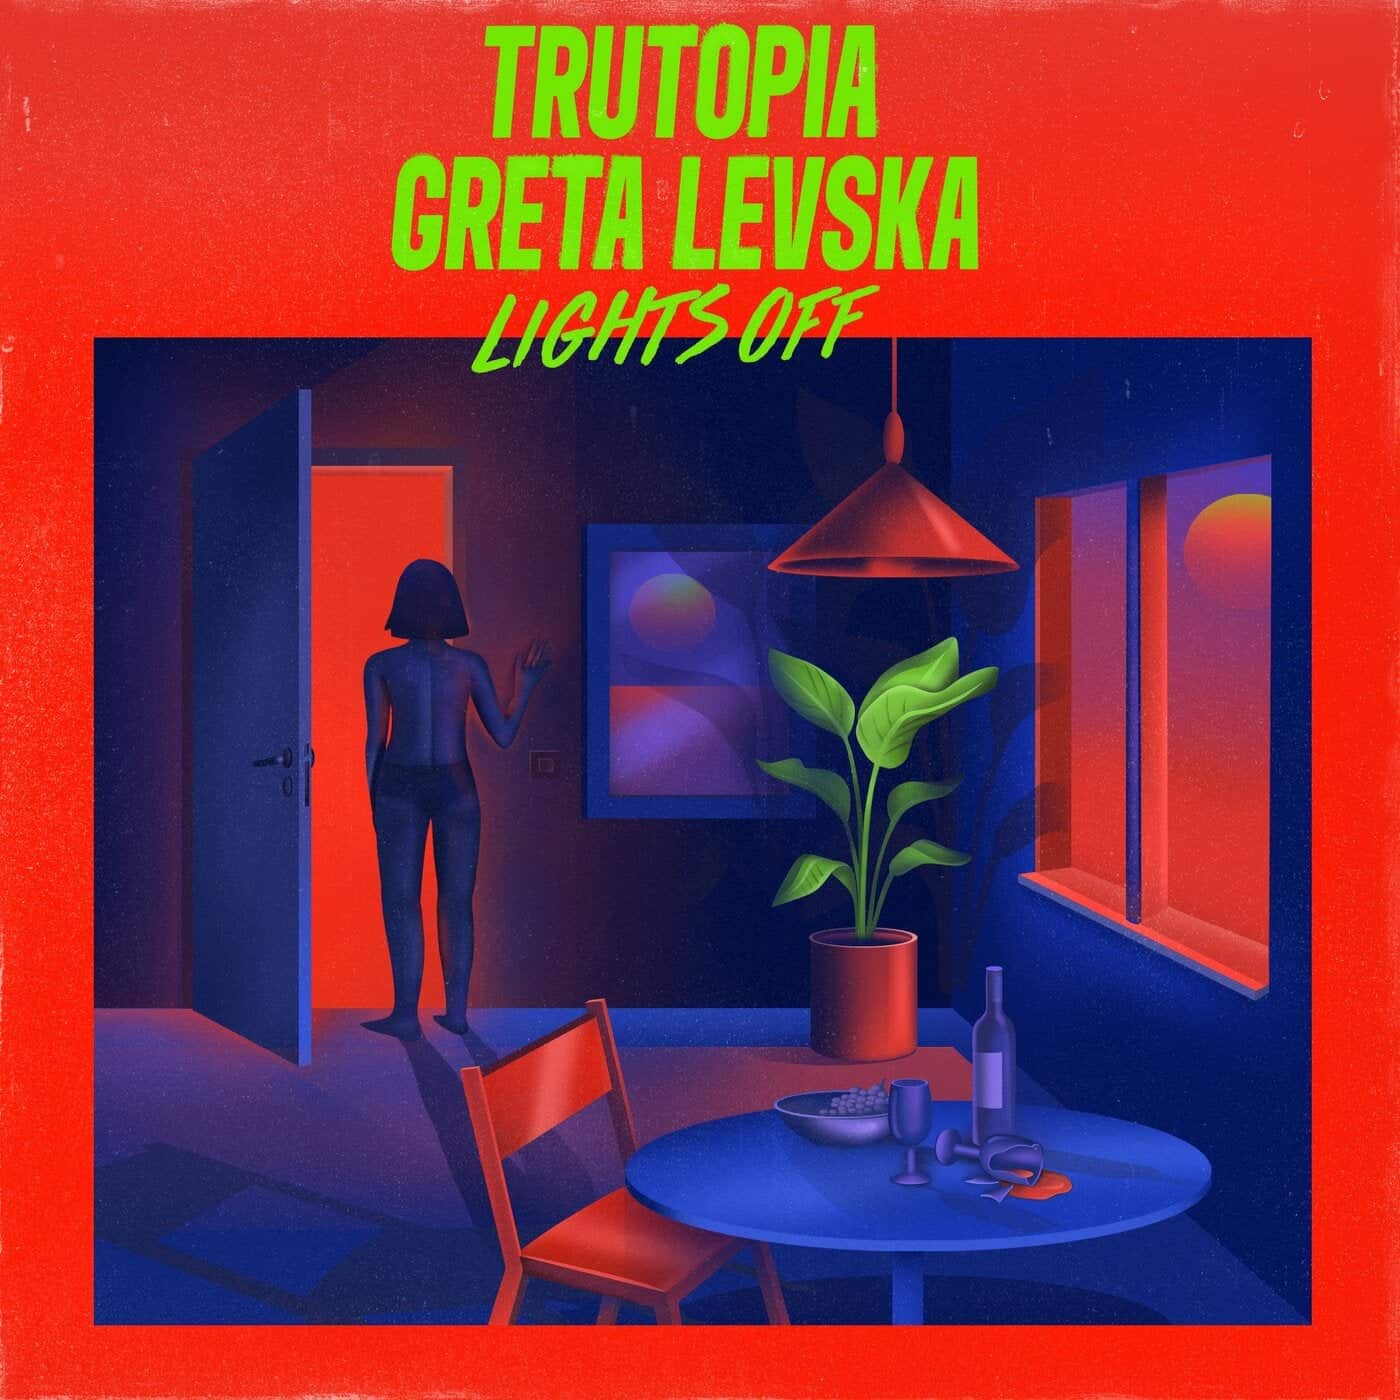 Download Trutopia, Greta Levska - Lights Off on Electrobuzz